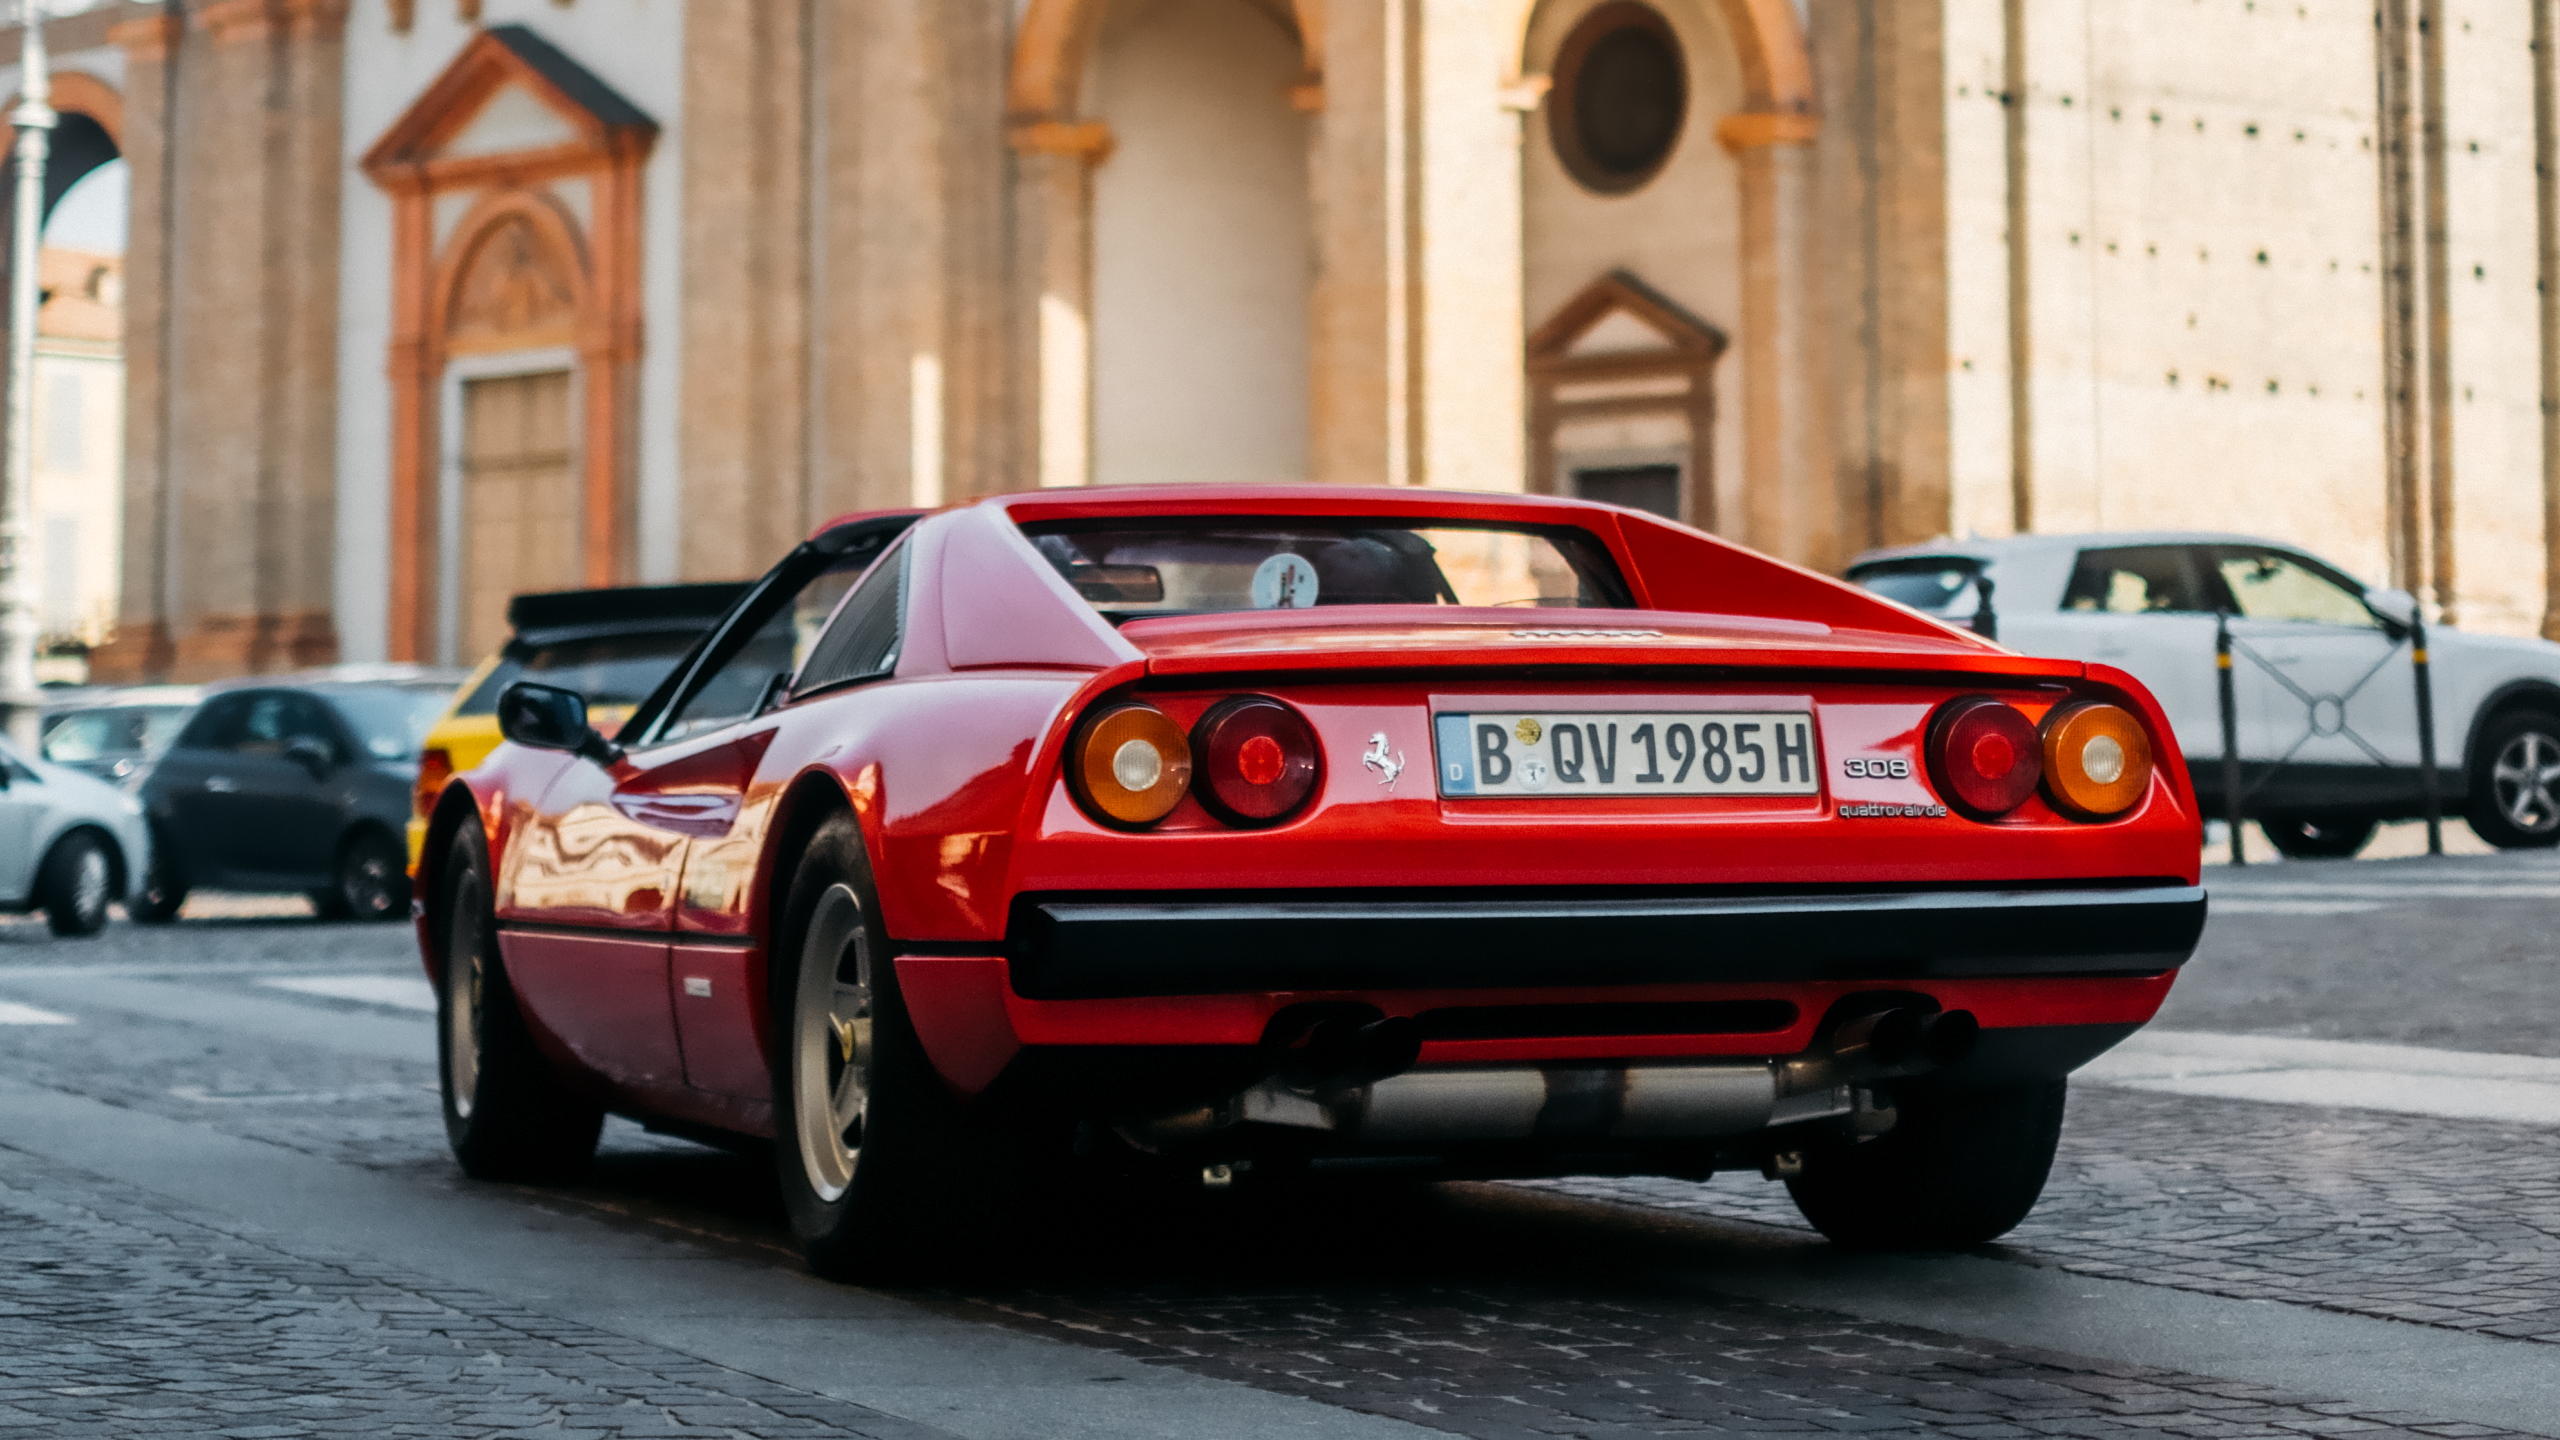 General 2560x1440 Ferrari 308 classic car 80s cars red cars car vehicle numbers Ferrari italian cars Stellantis